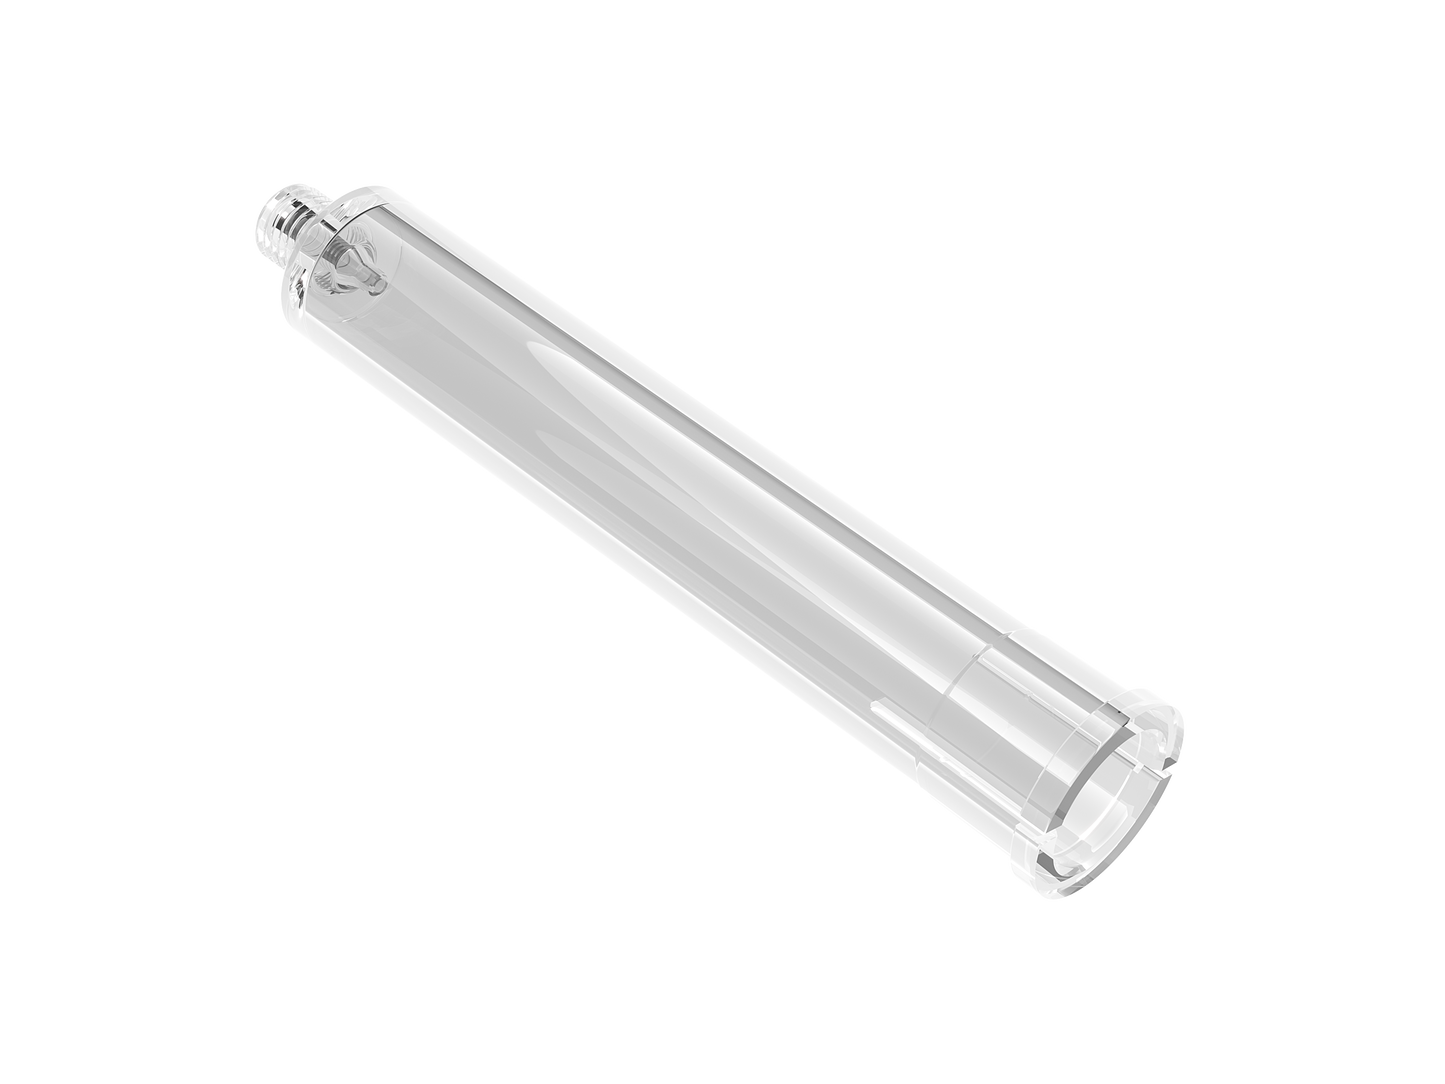 Dentapen Cartridge Holder Product Image